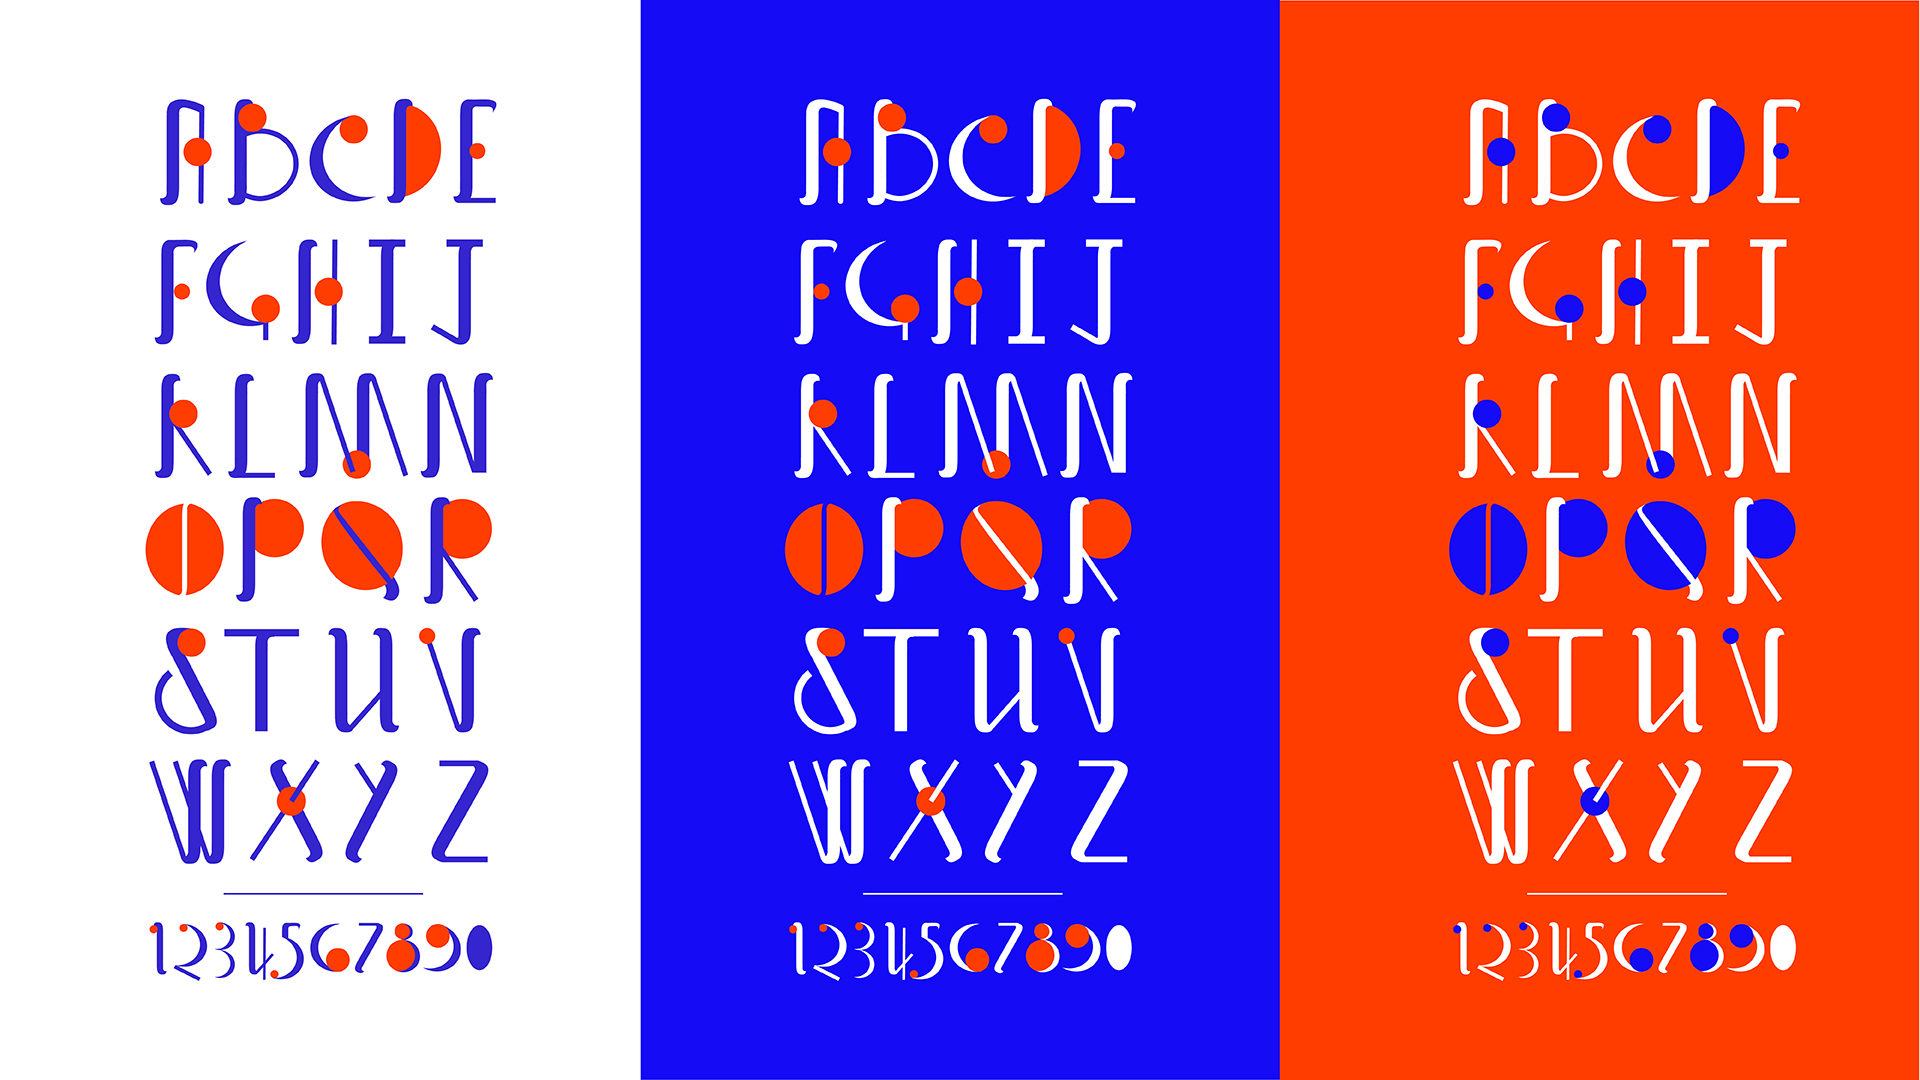 custom type design in bright blue, orange and white